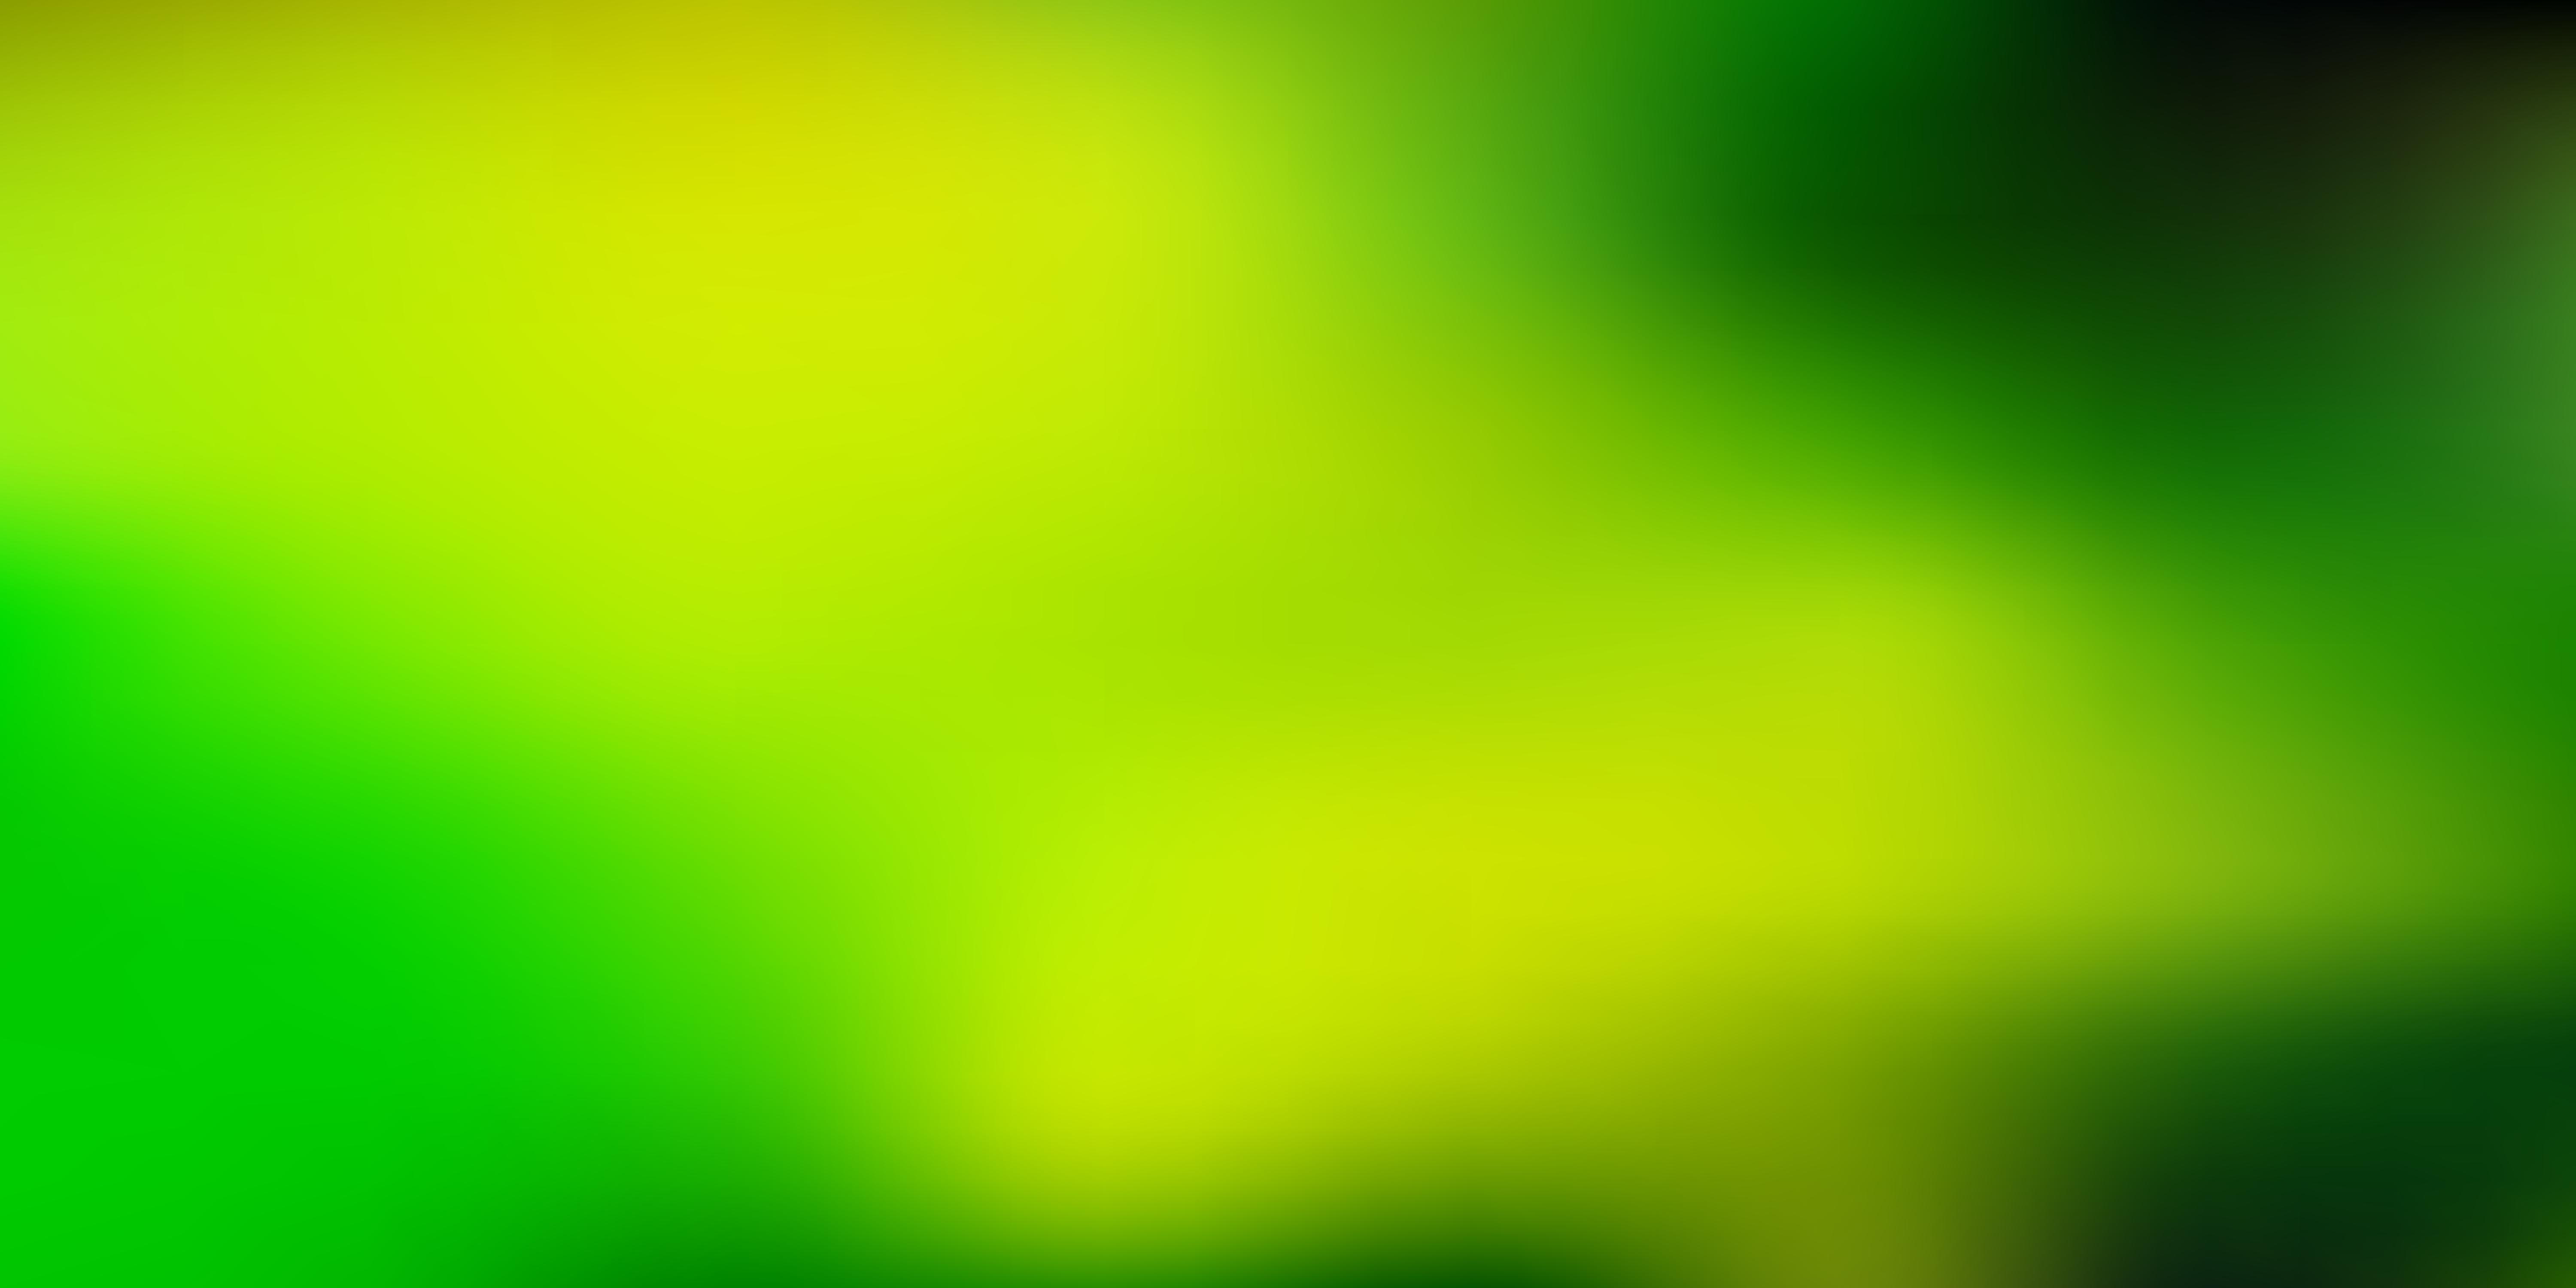 461651 Dark Green Blur Background Images Stock Photos  Vectors   Shutterstock